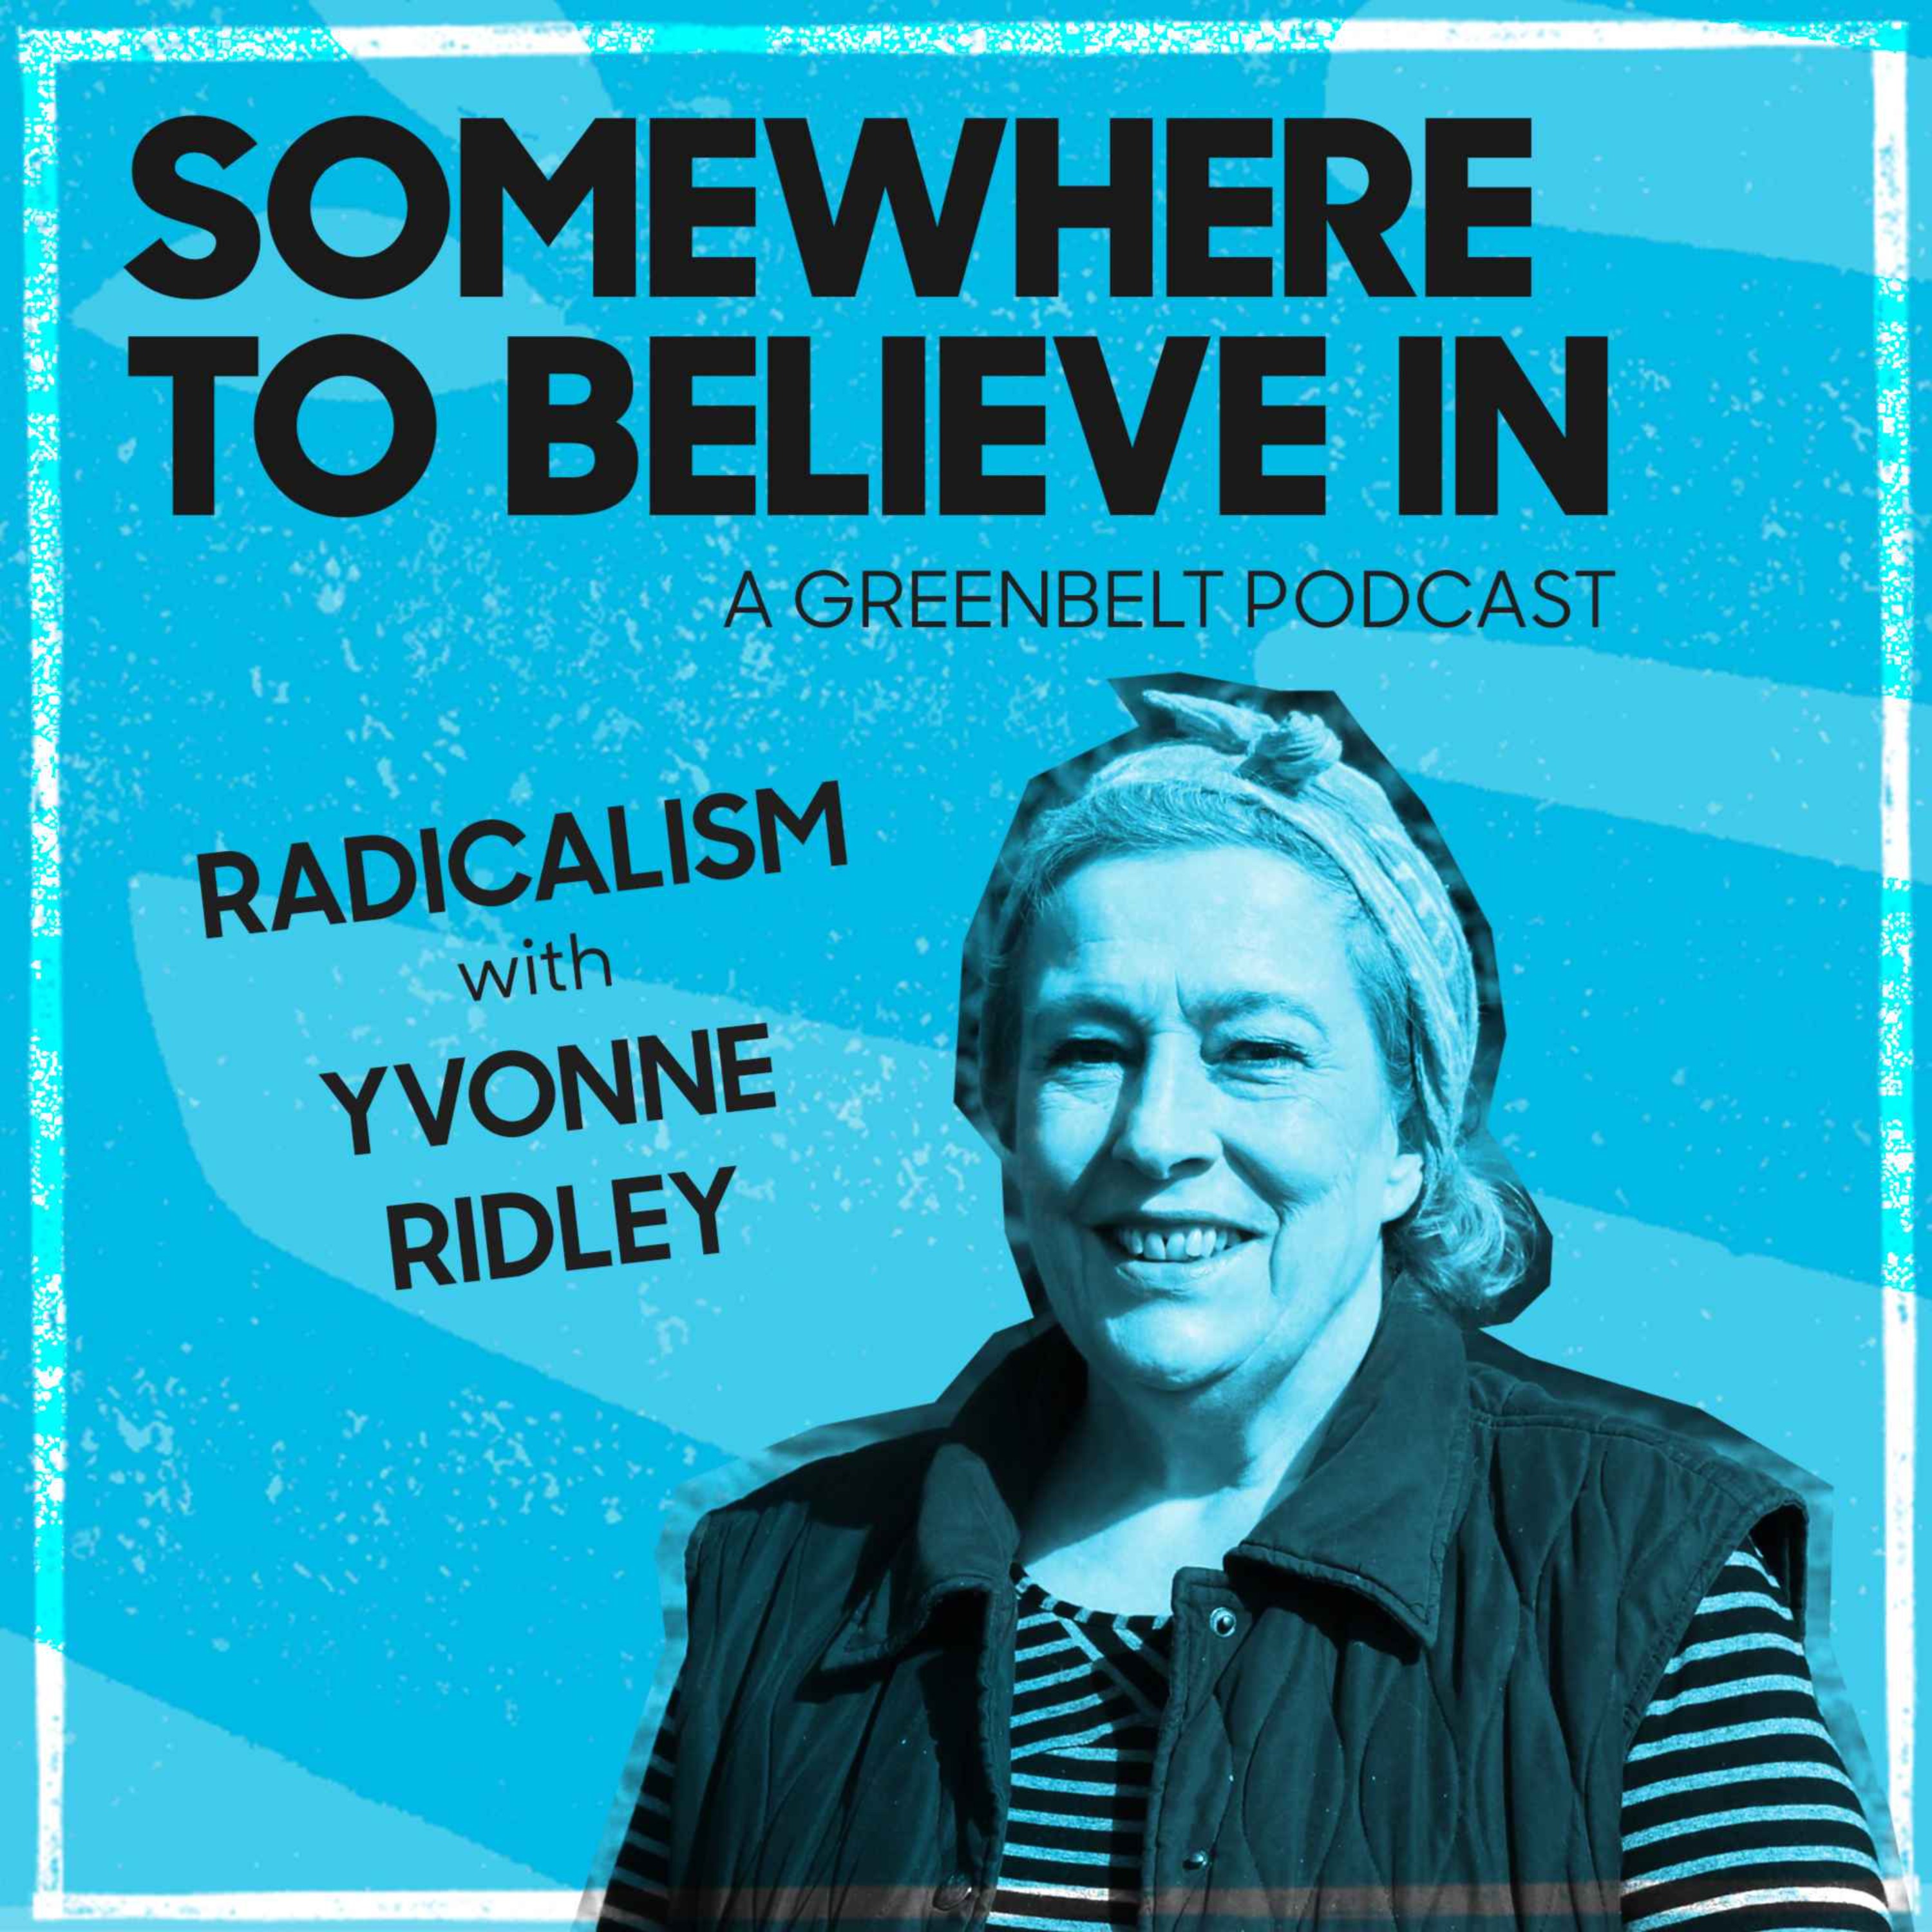 Radicalism with Yvonne Ridley